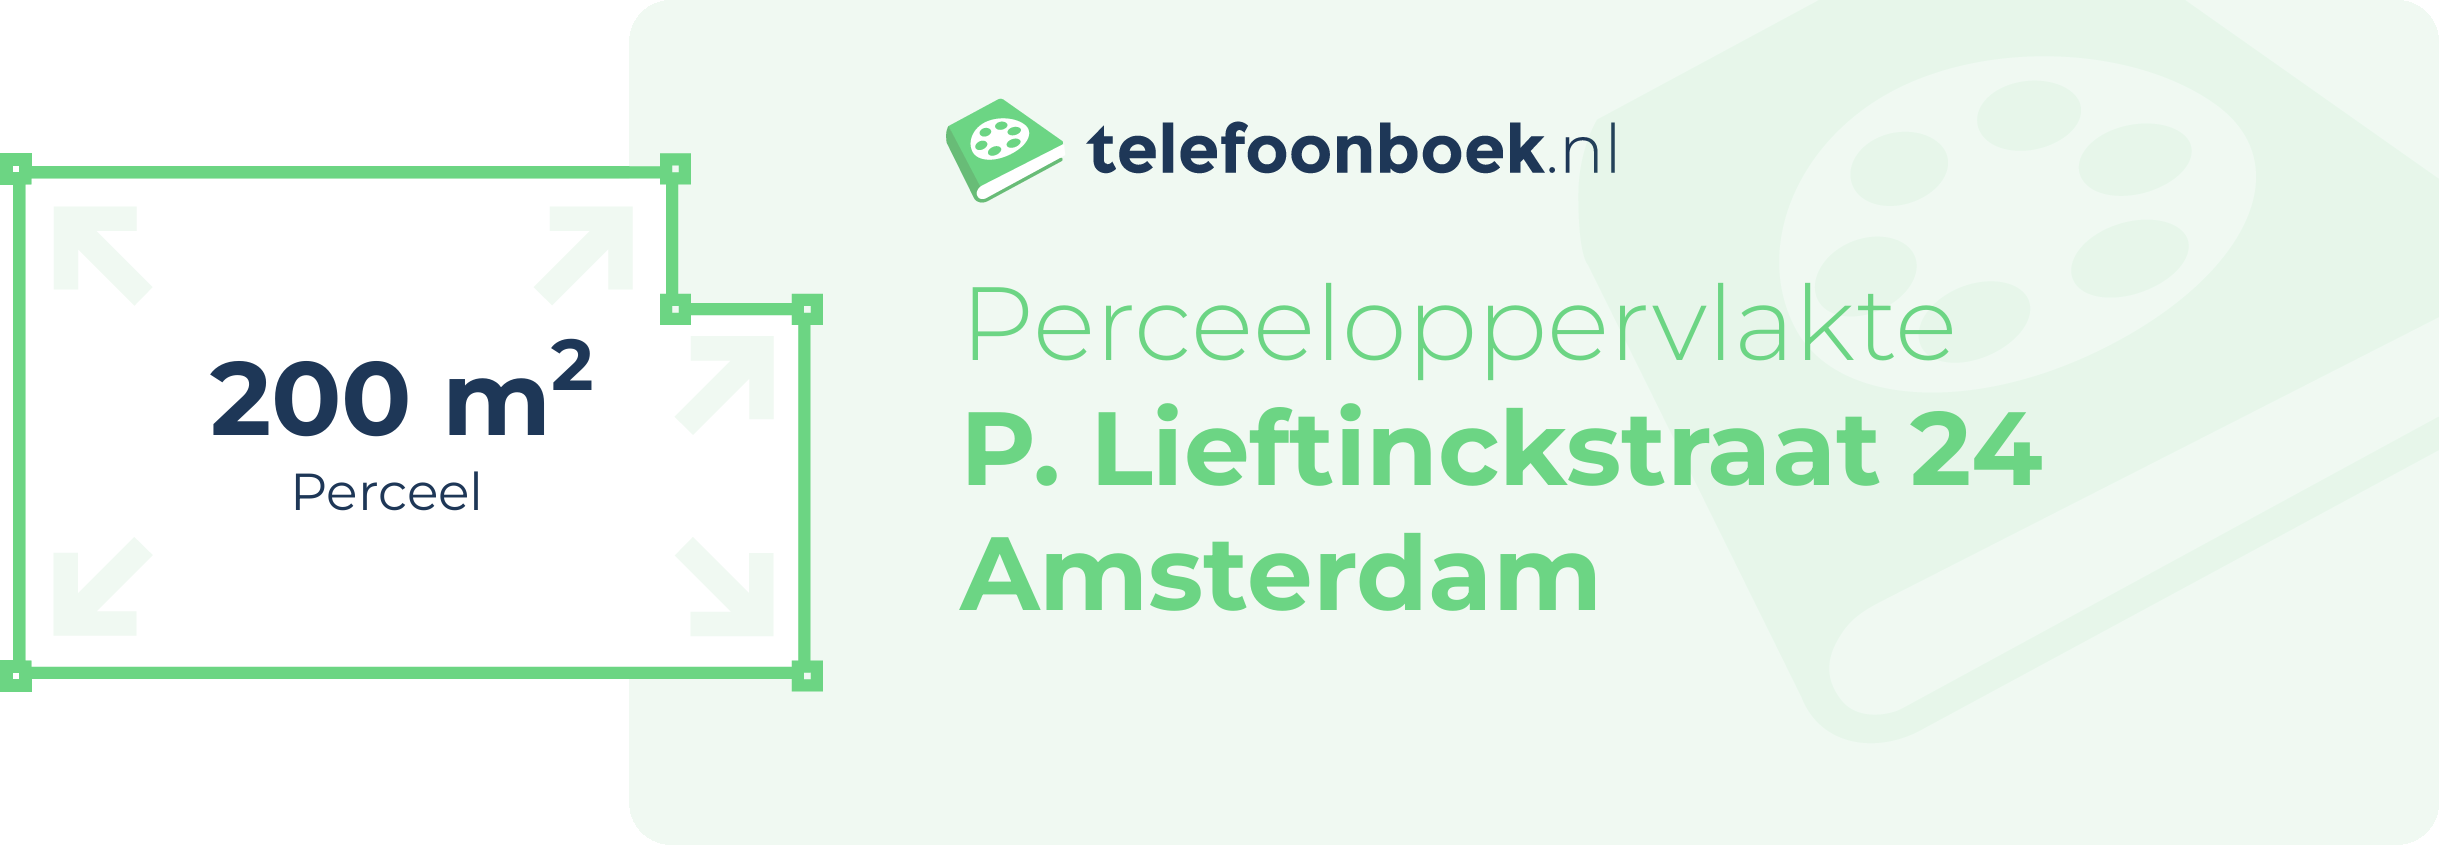 Perceeloppervlakte P. Lieftinckstraat 24 Amsterdam